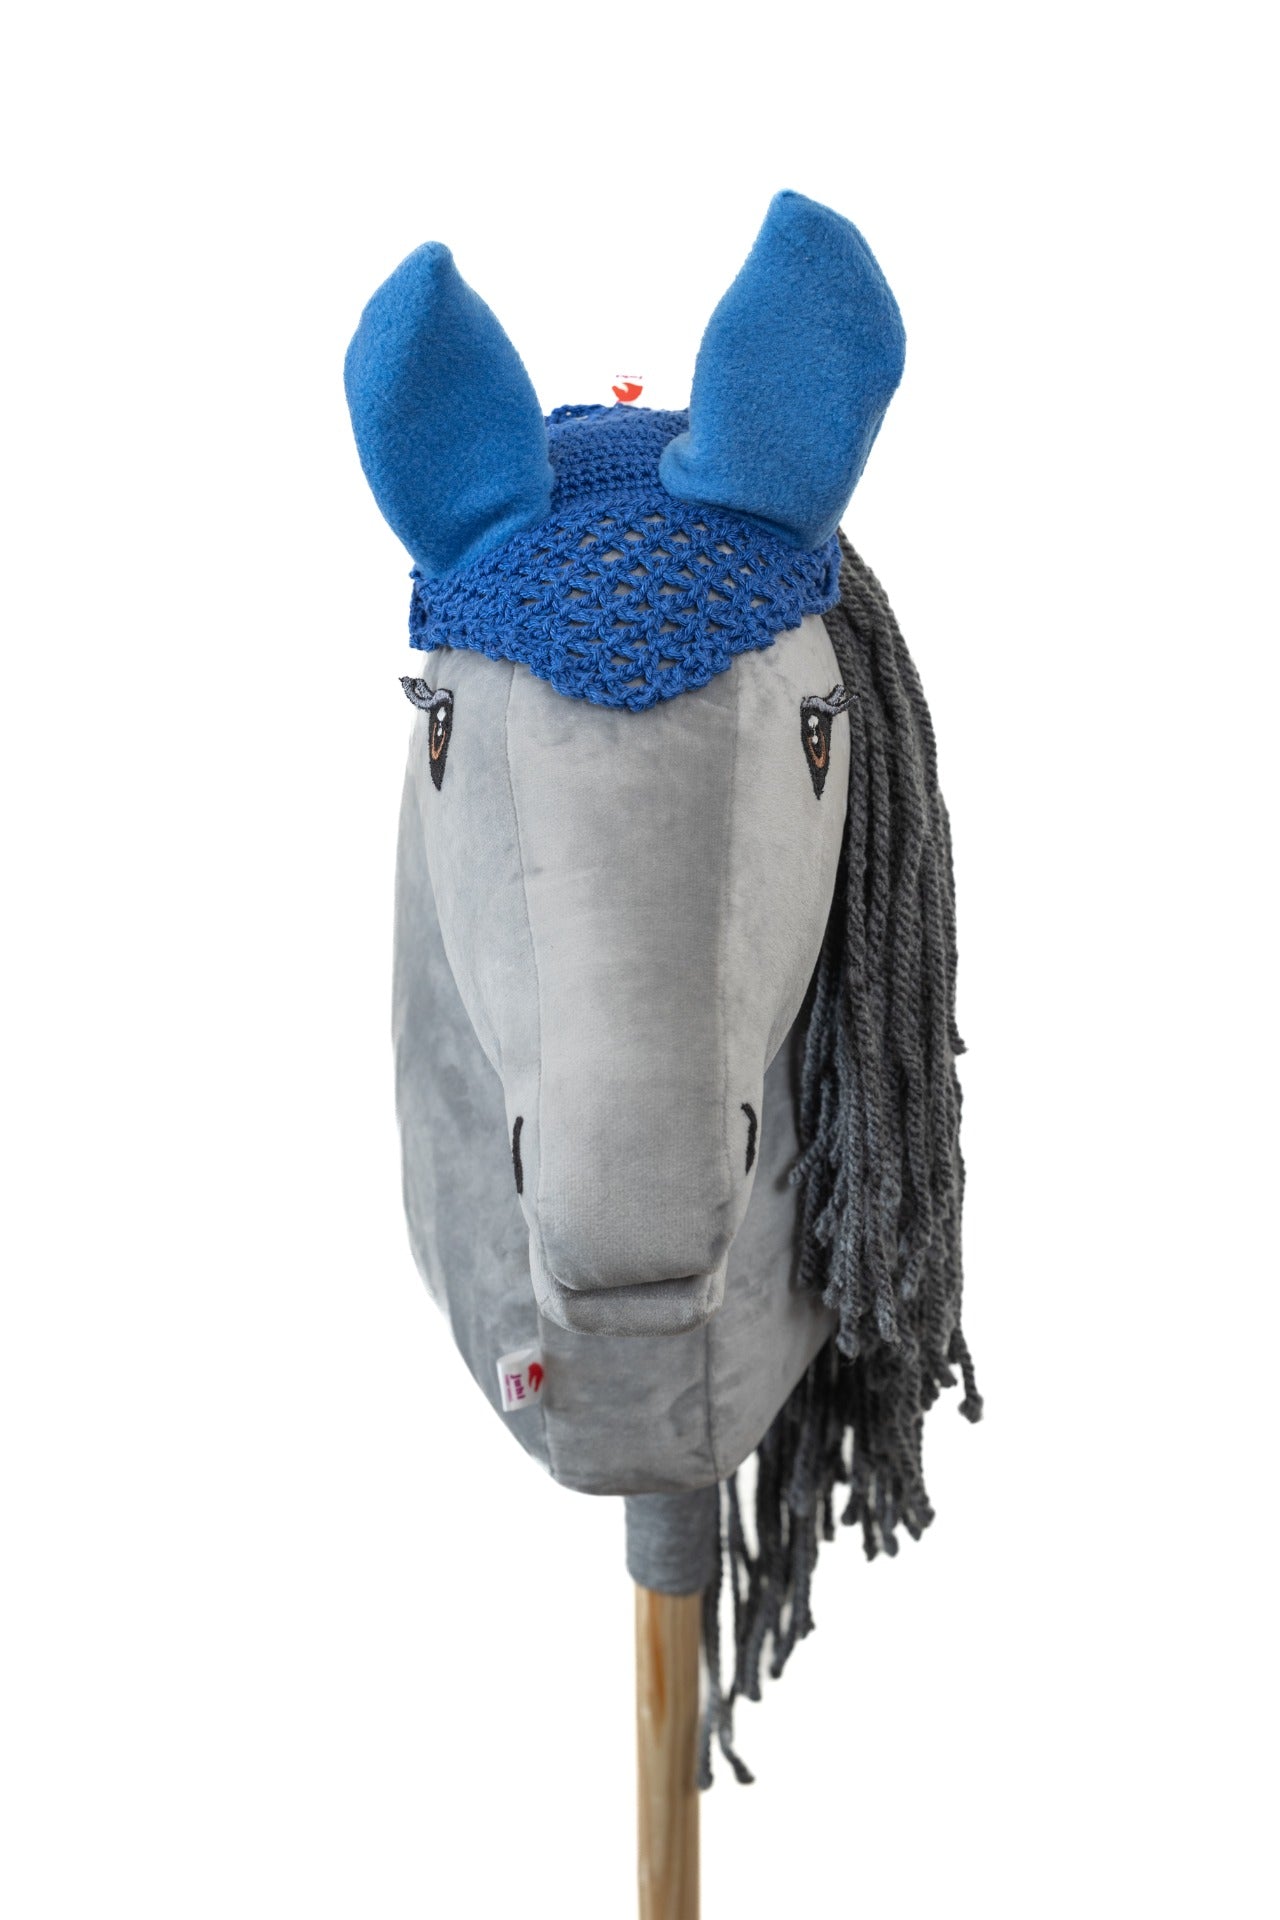 Čabraka háčkovaná - Tmavě modrá s modrýma ušima - Dospělý kůň